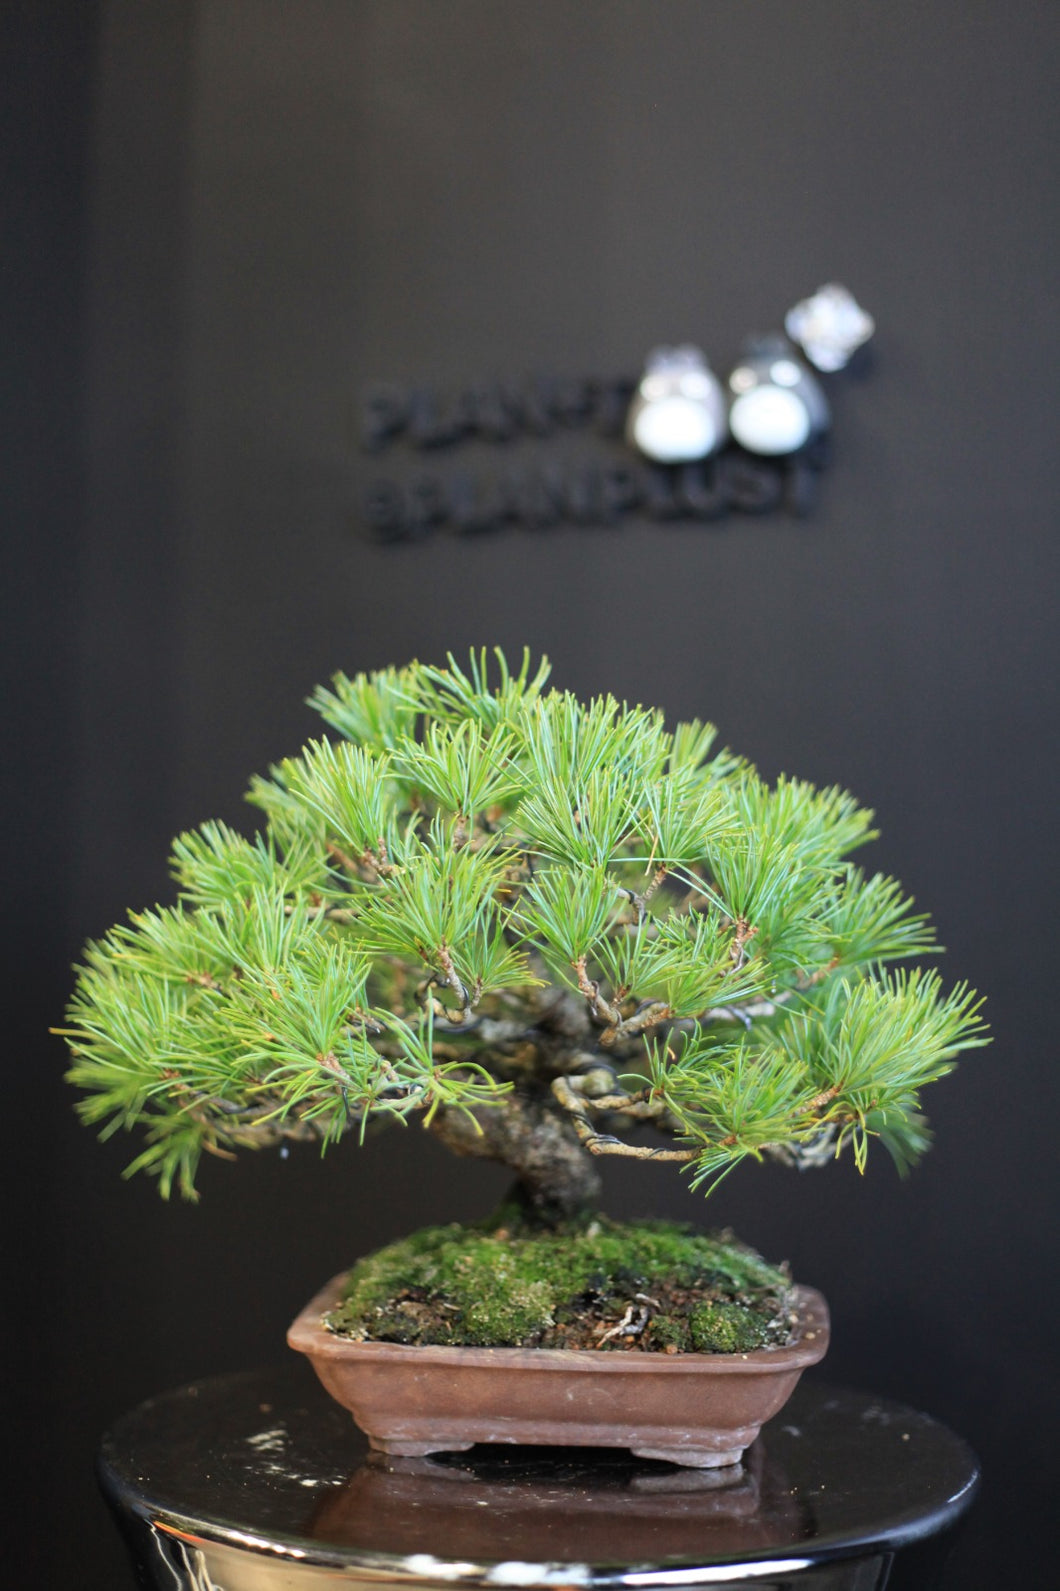 日本🇯🇵五葉松 Japanese White Pine (附上影片)